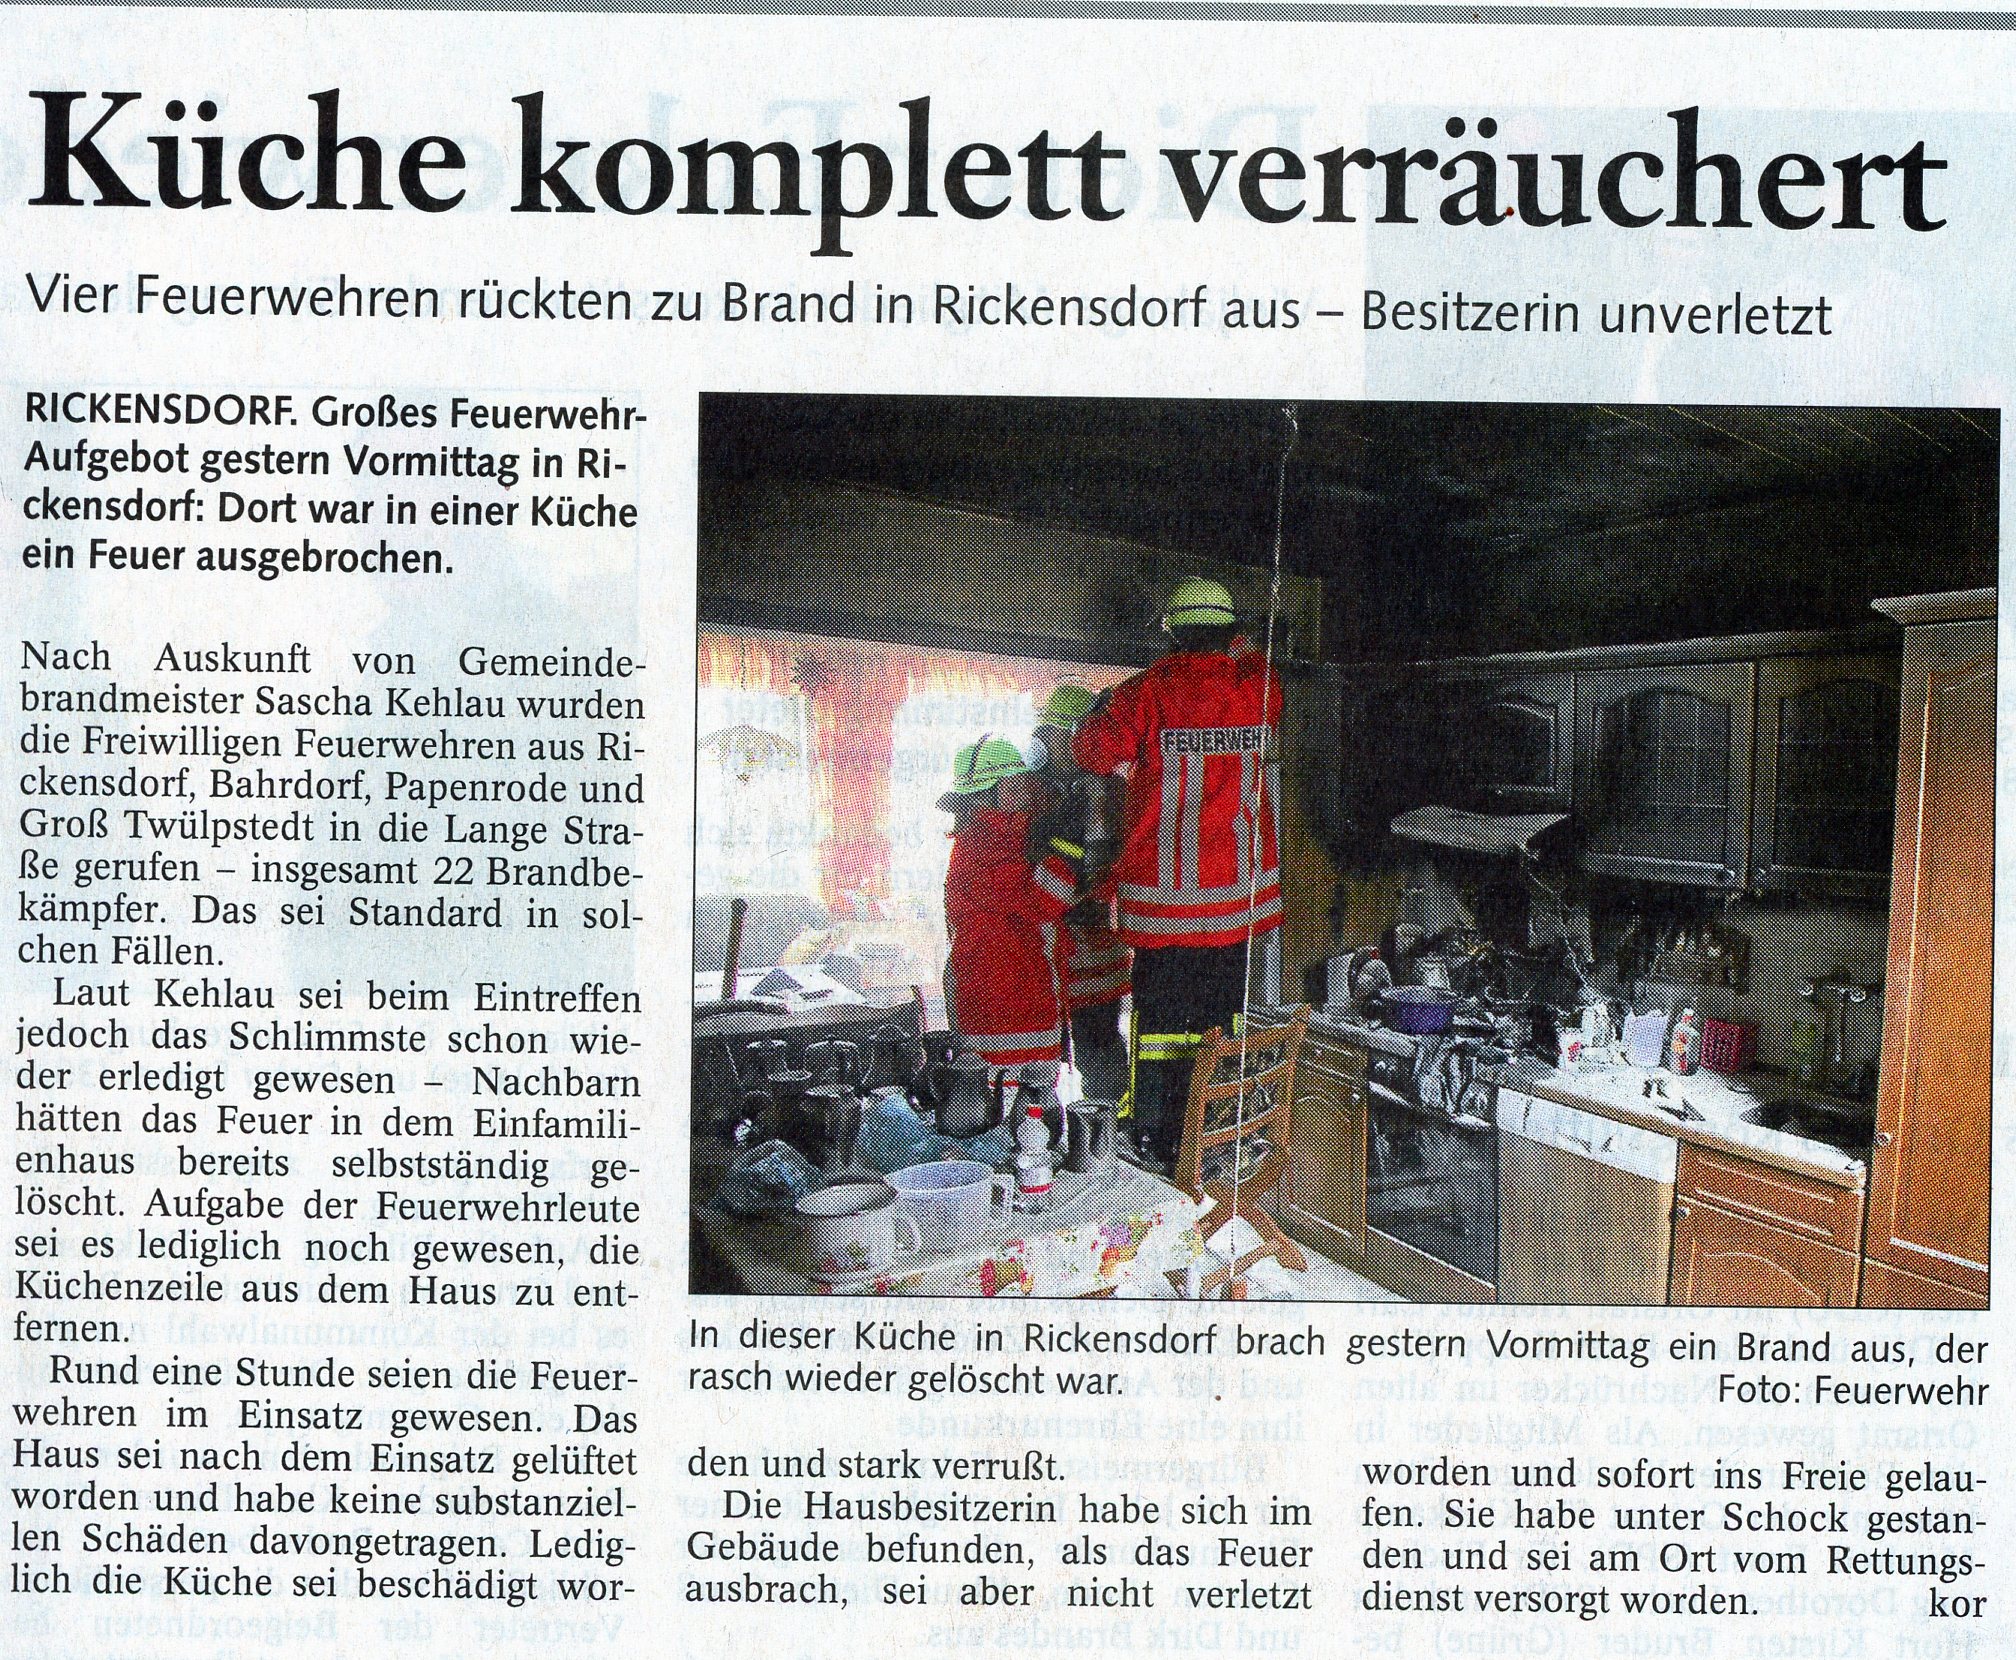 2011 11 16 Kuchenbrand001